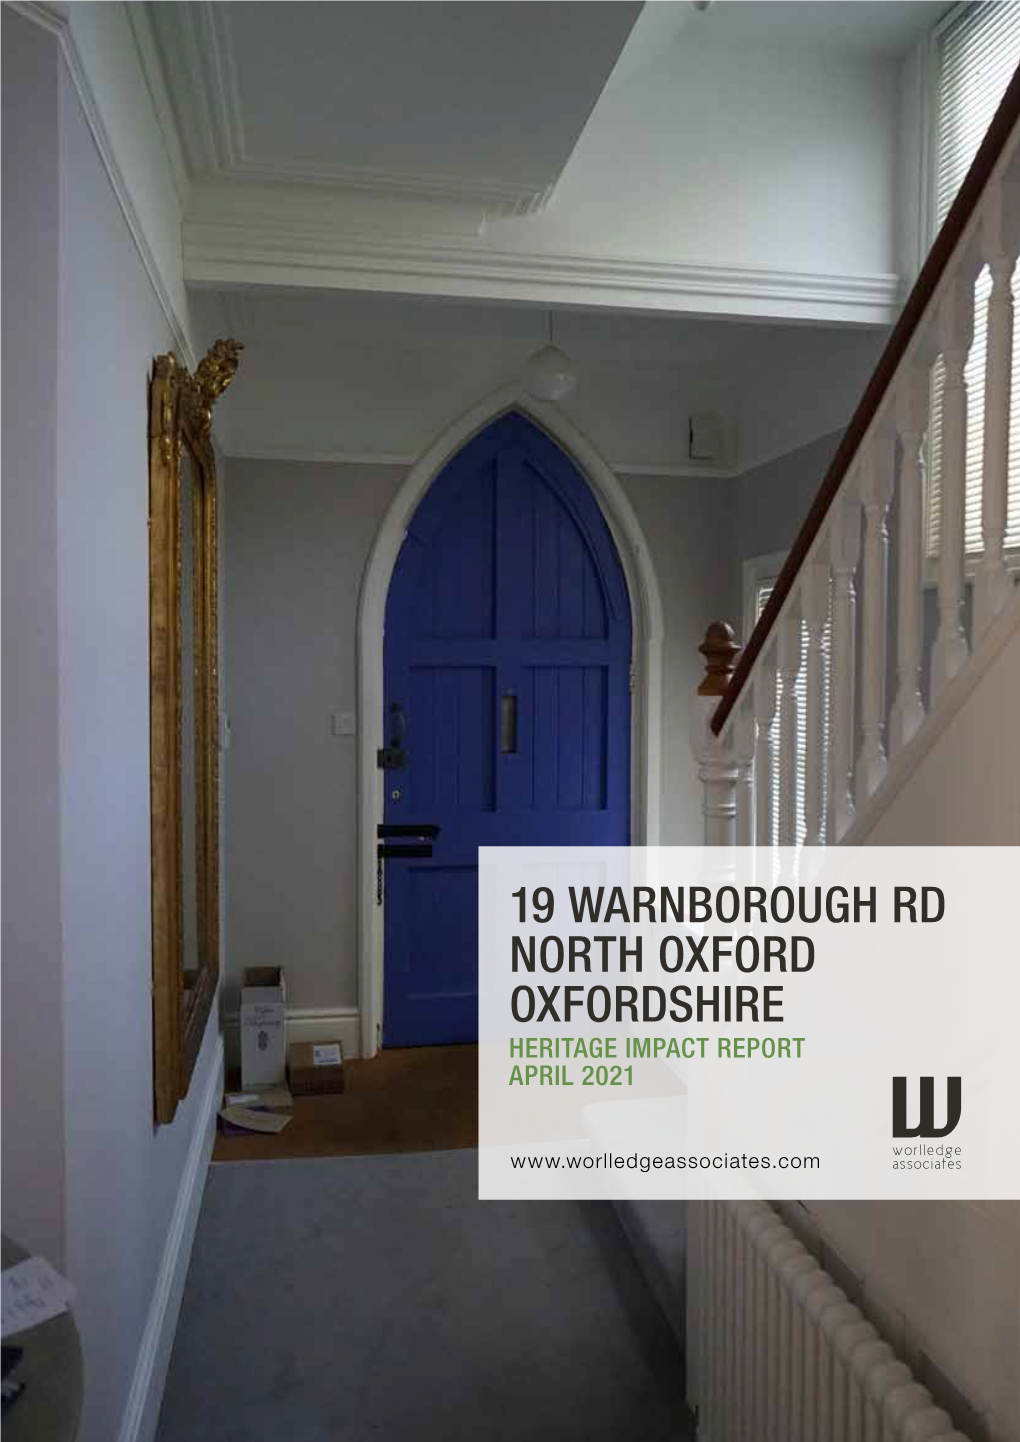 19 Warnborough Rd North Oxford Oxfordshire Heritage Impact Report April 2021